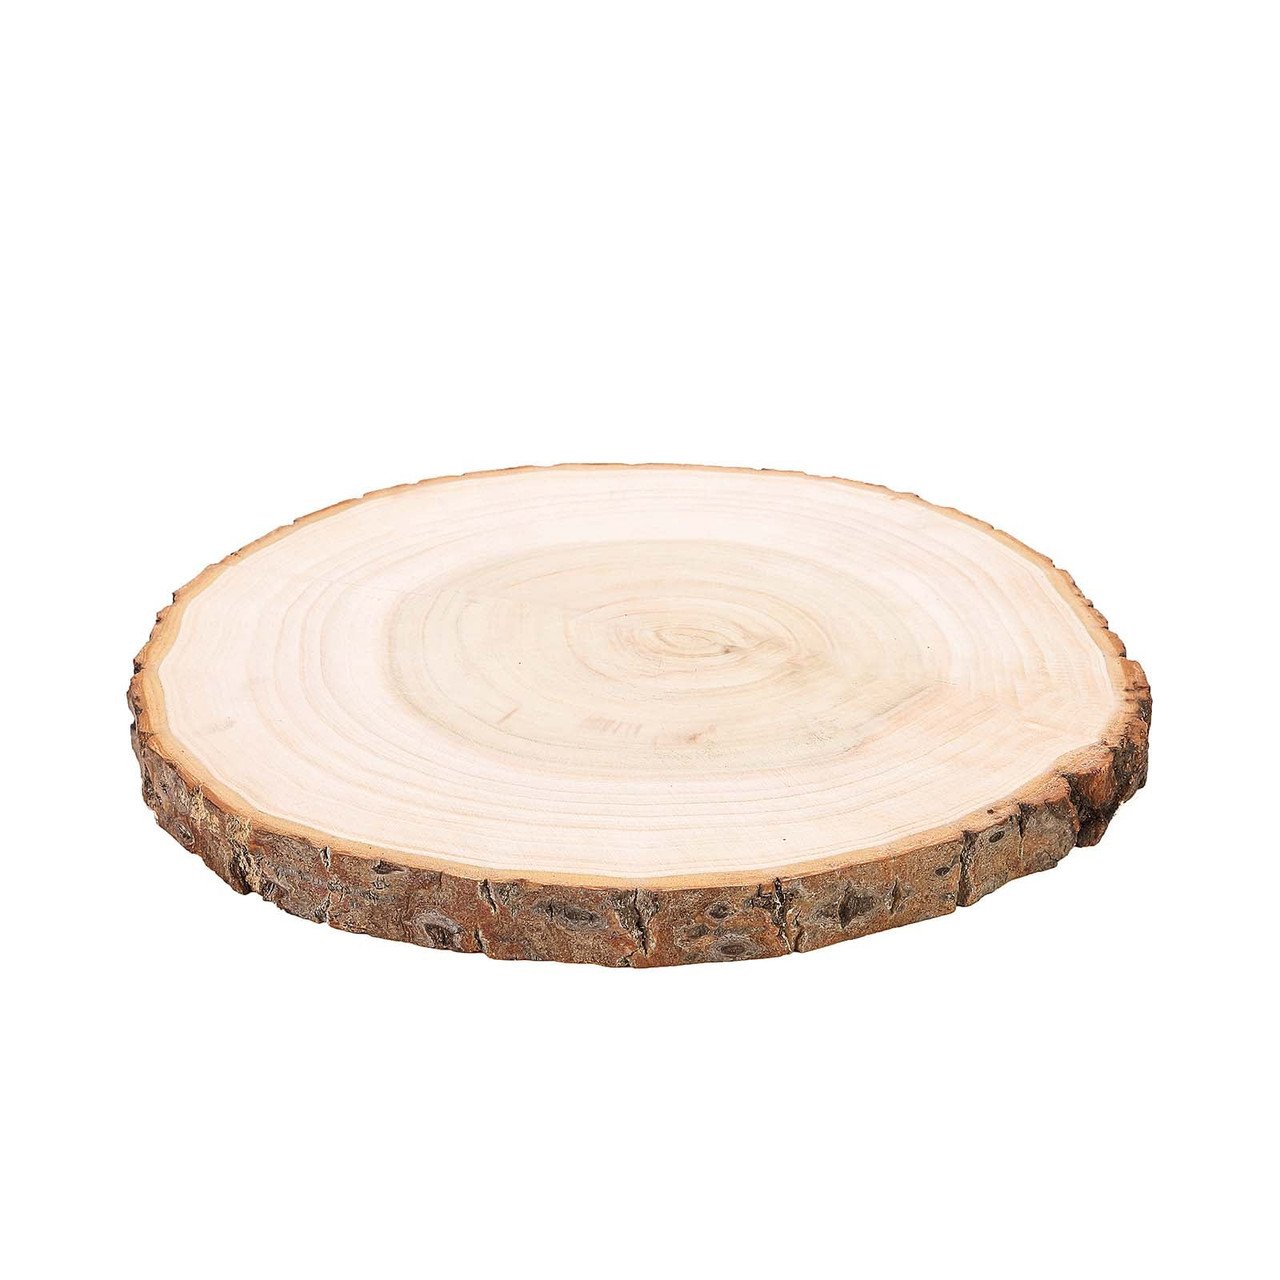 Case of 12 Rustic Natural Wood Slices, Rectangular Poplar Wood